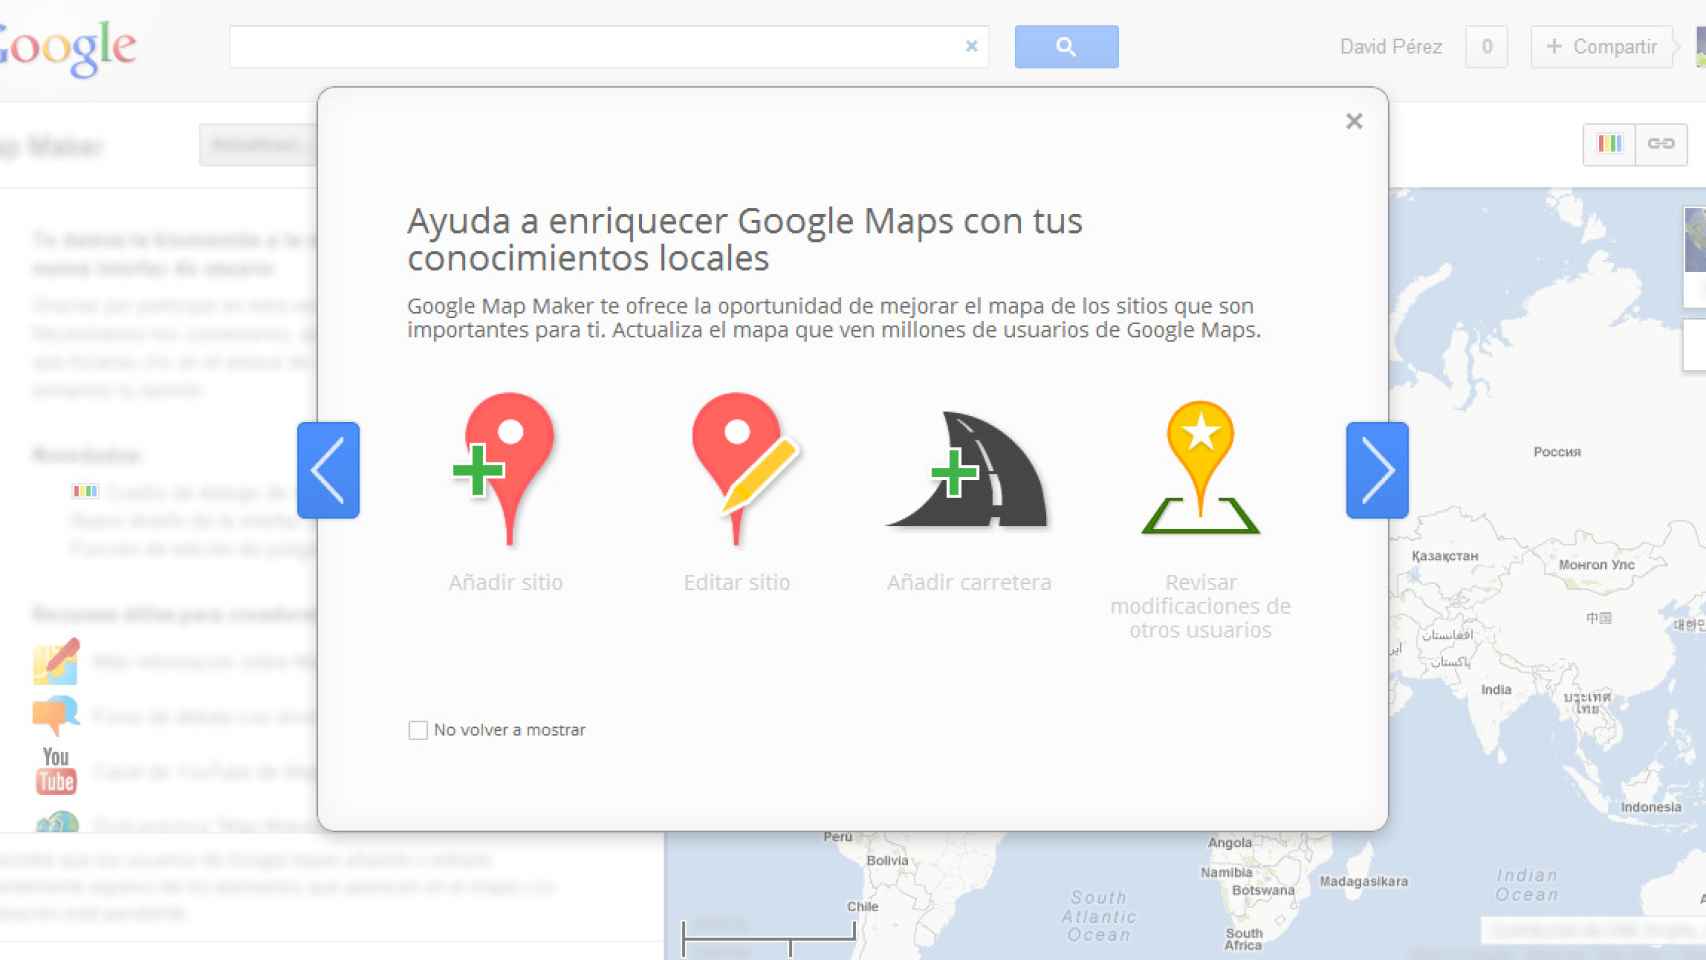 Google Map Maker regresa en agosto tras cerrar por los trolls